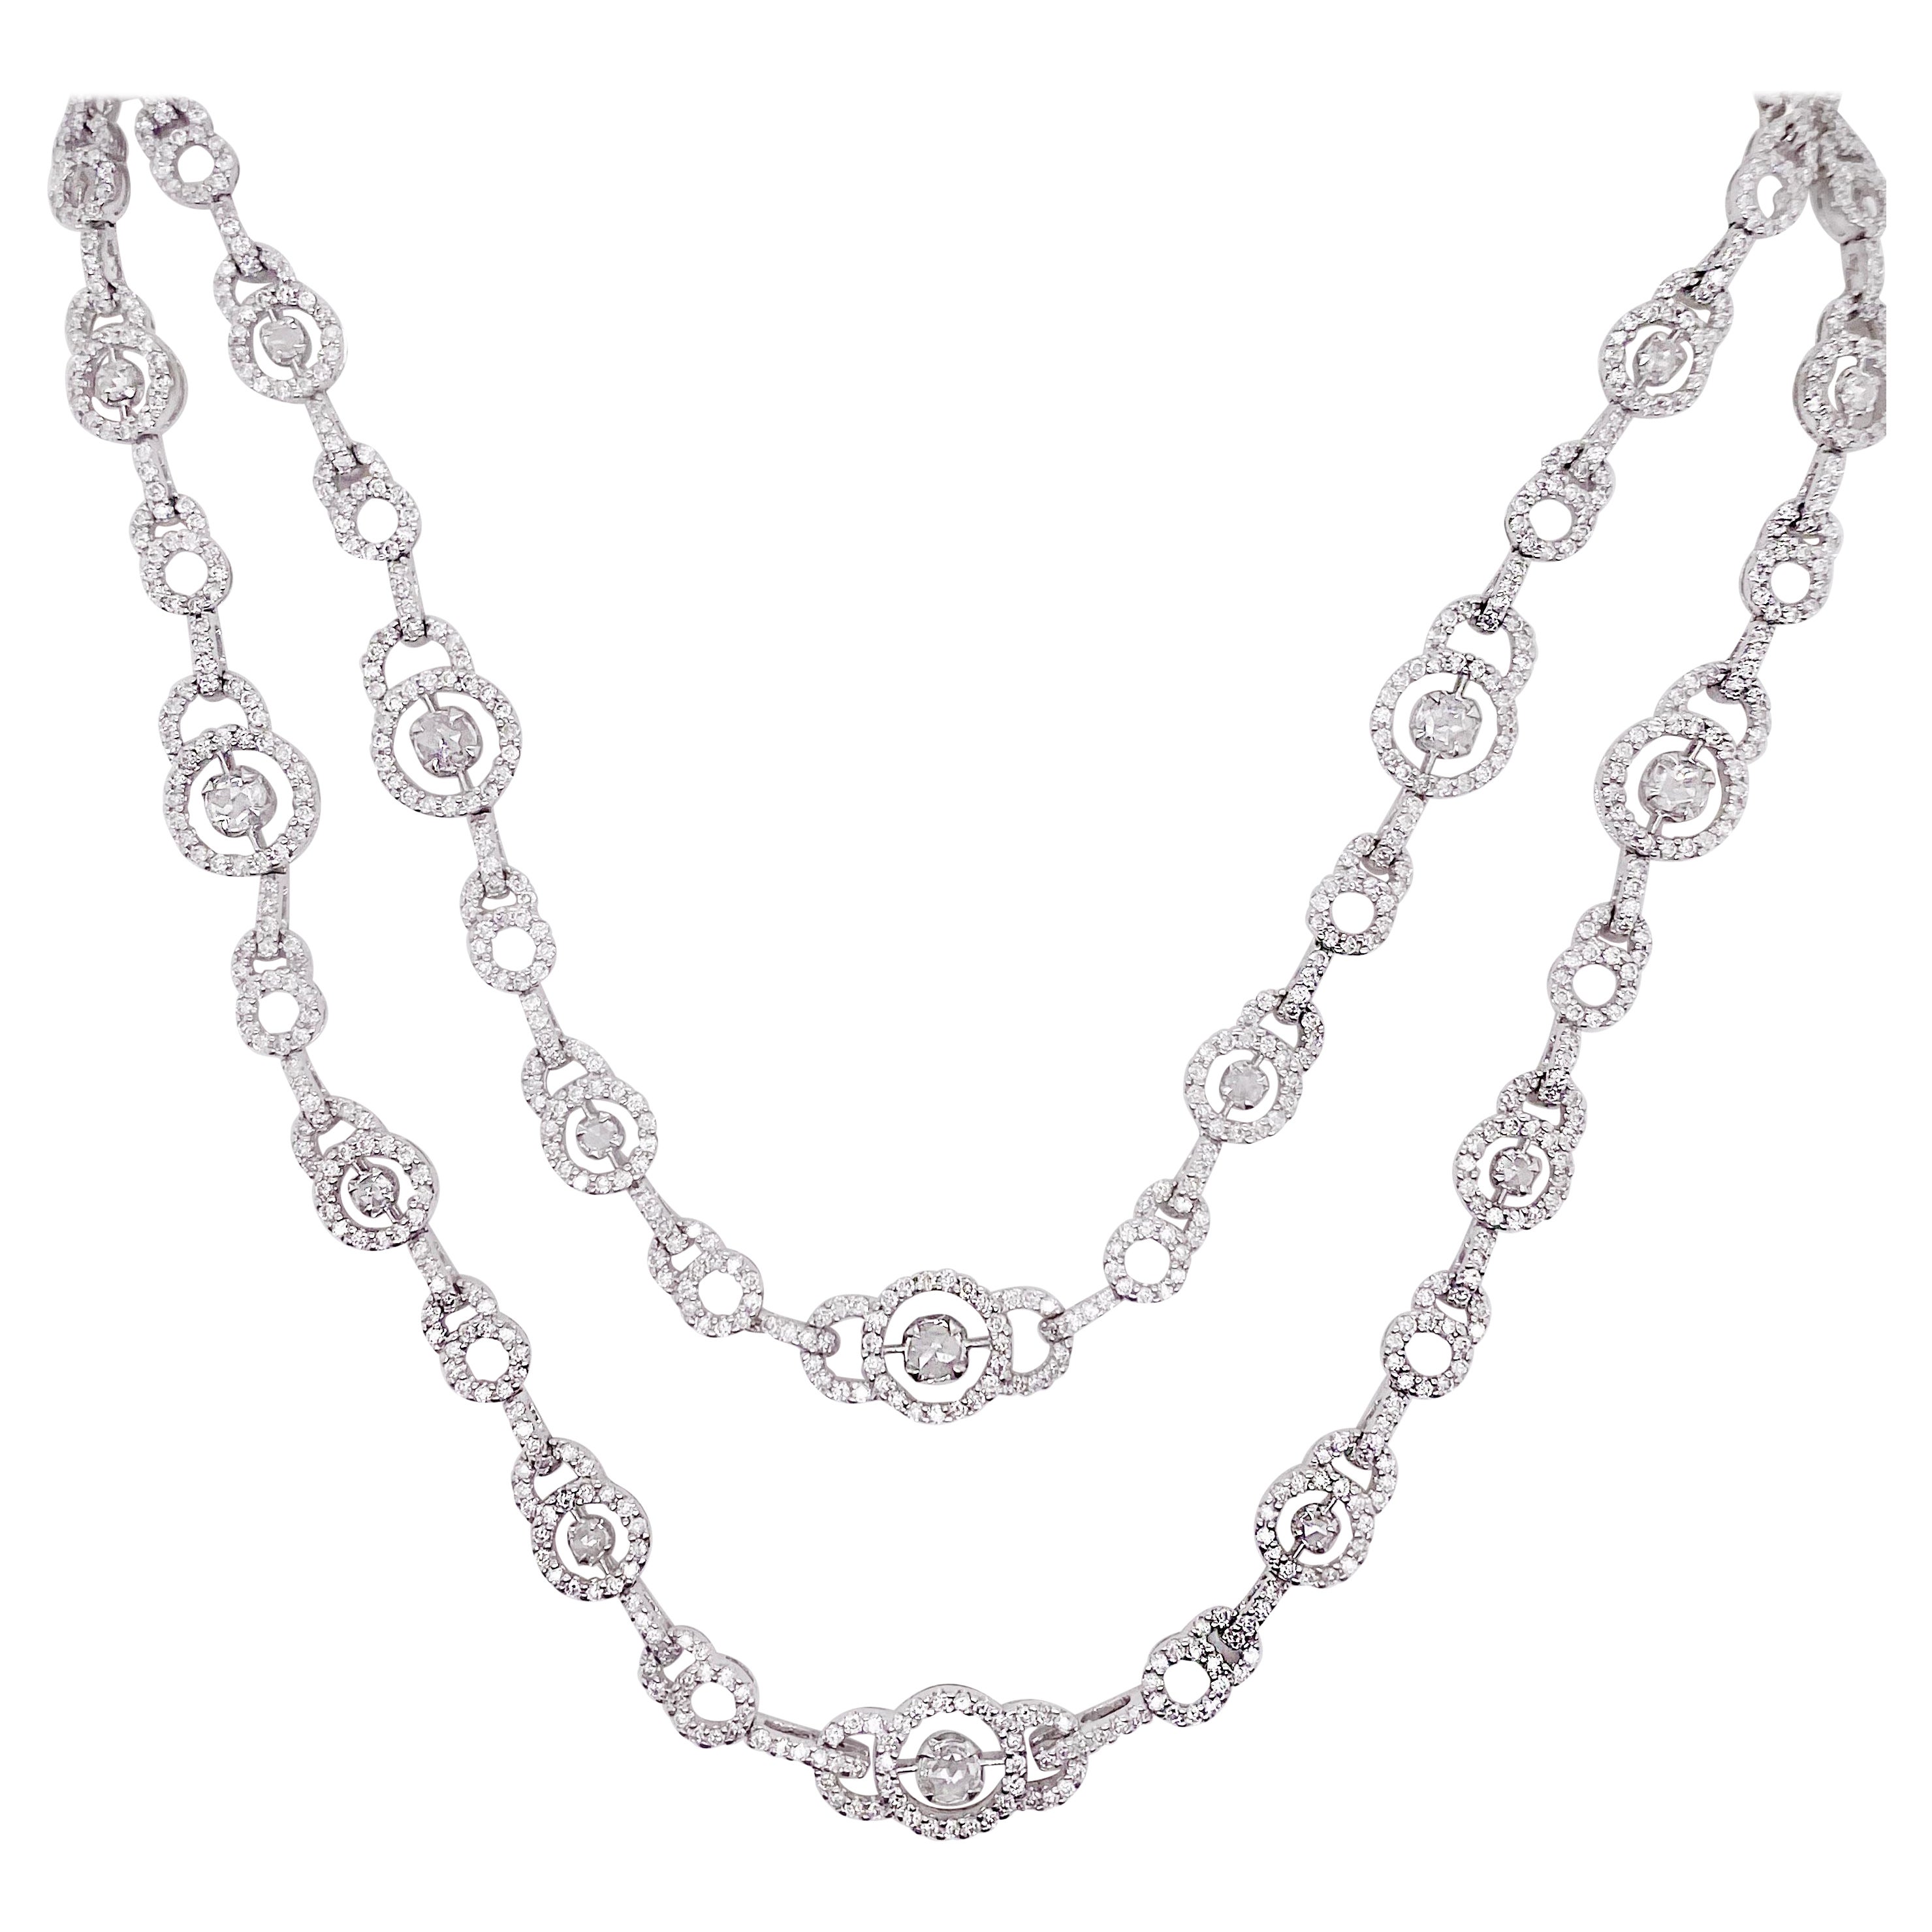 10 Carat Necklace Diamond Double Strand Necklace, White Gold, 884 Diamonds